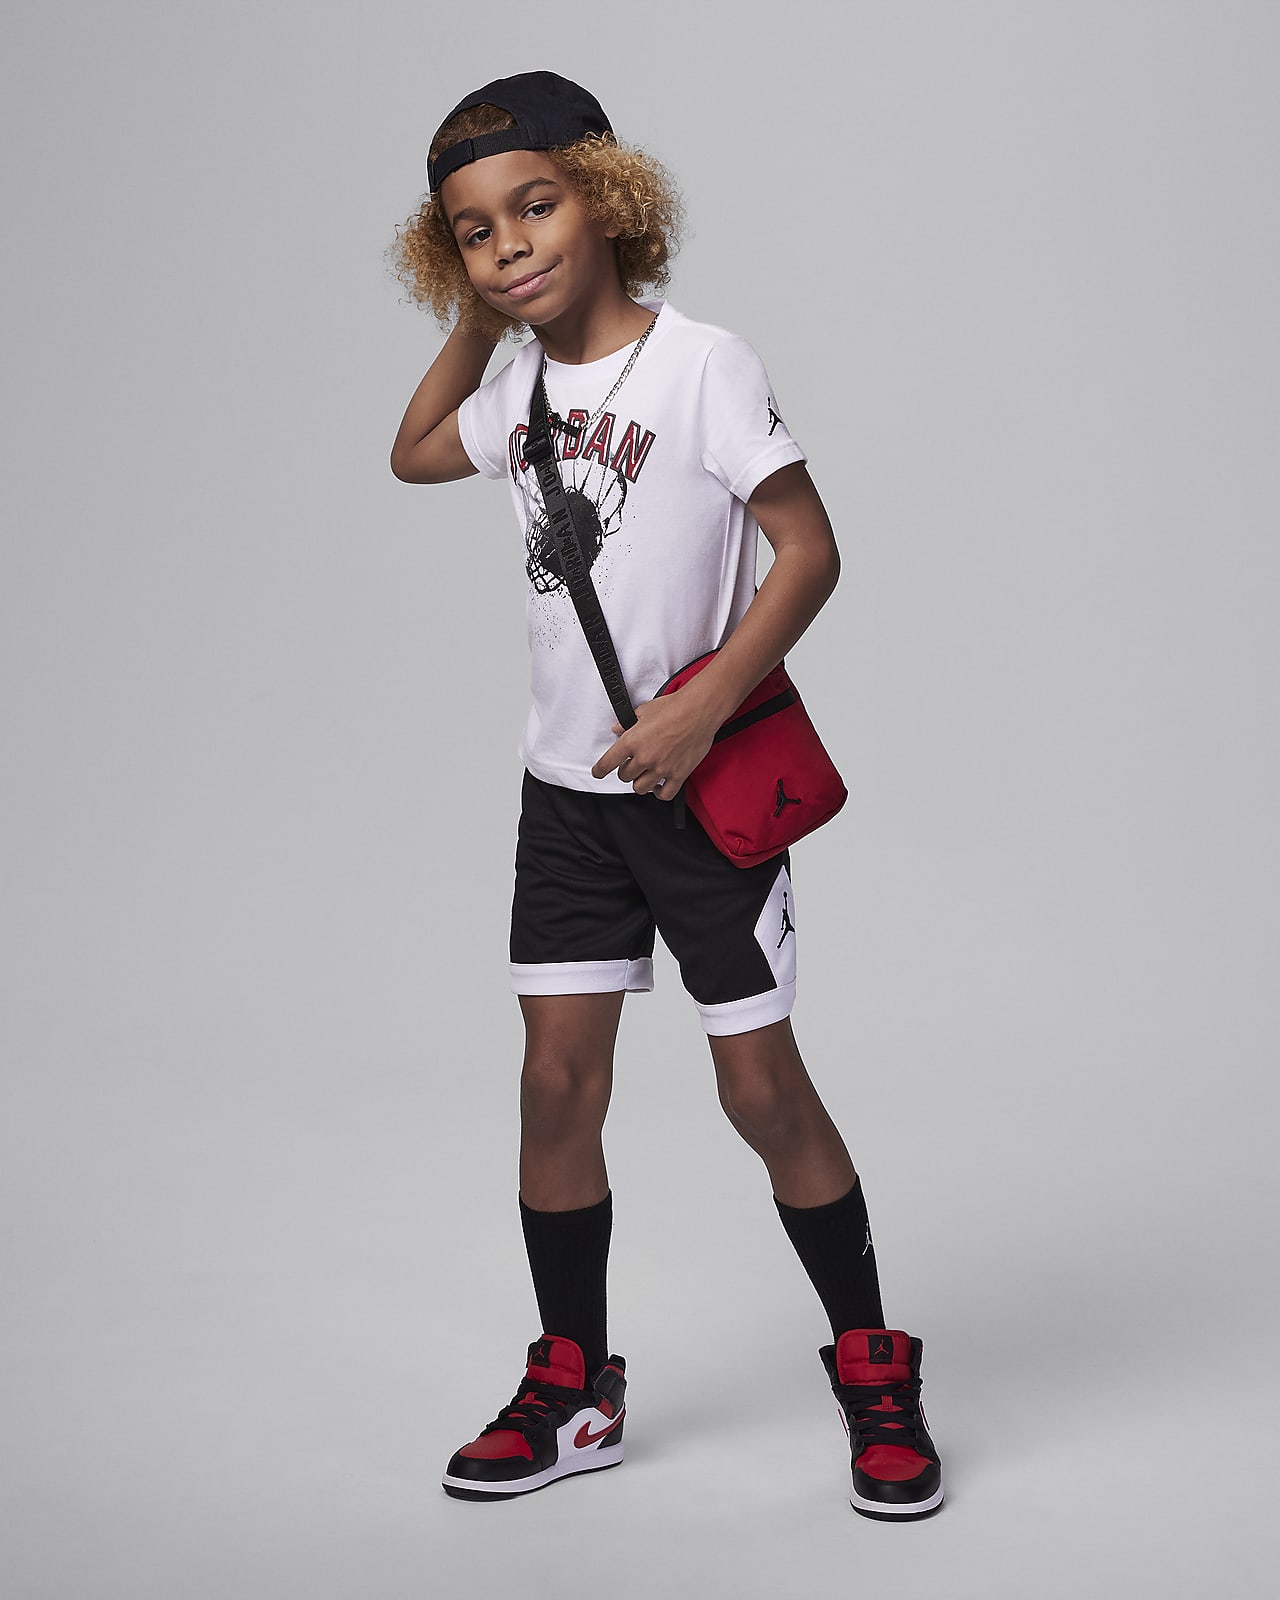 Jordan Hoop Styles Younger Kids' 2-Piece Shorts Set